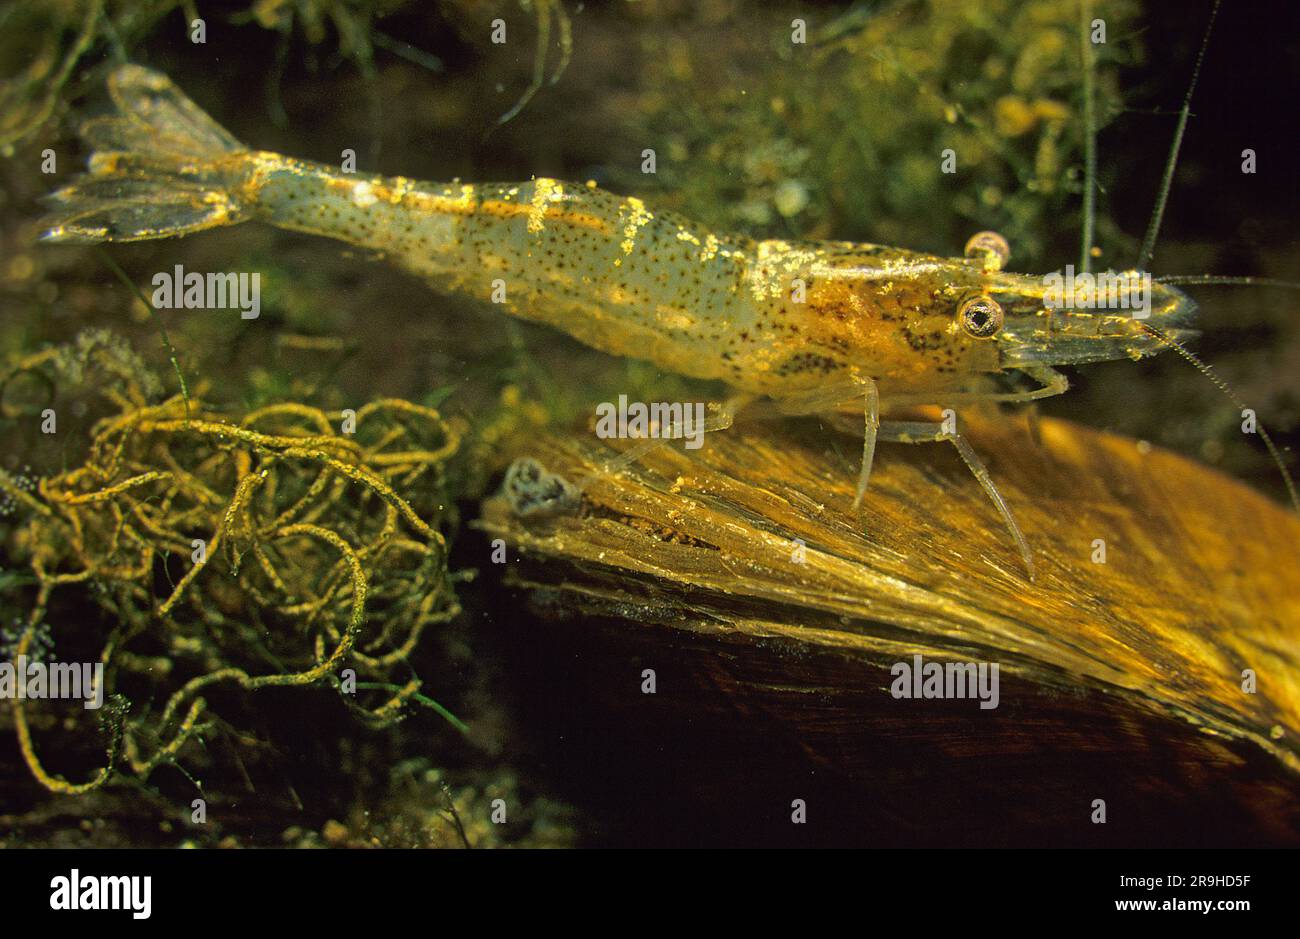 European Freshwater Shrimp (Atyaephyra desmaresti) on a Freshwater shell (Dreissena polymorpha), Baden-Wuerttemberg, Germany, Europe Stock Photo